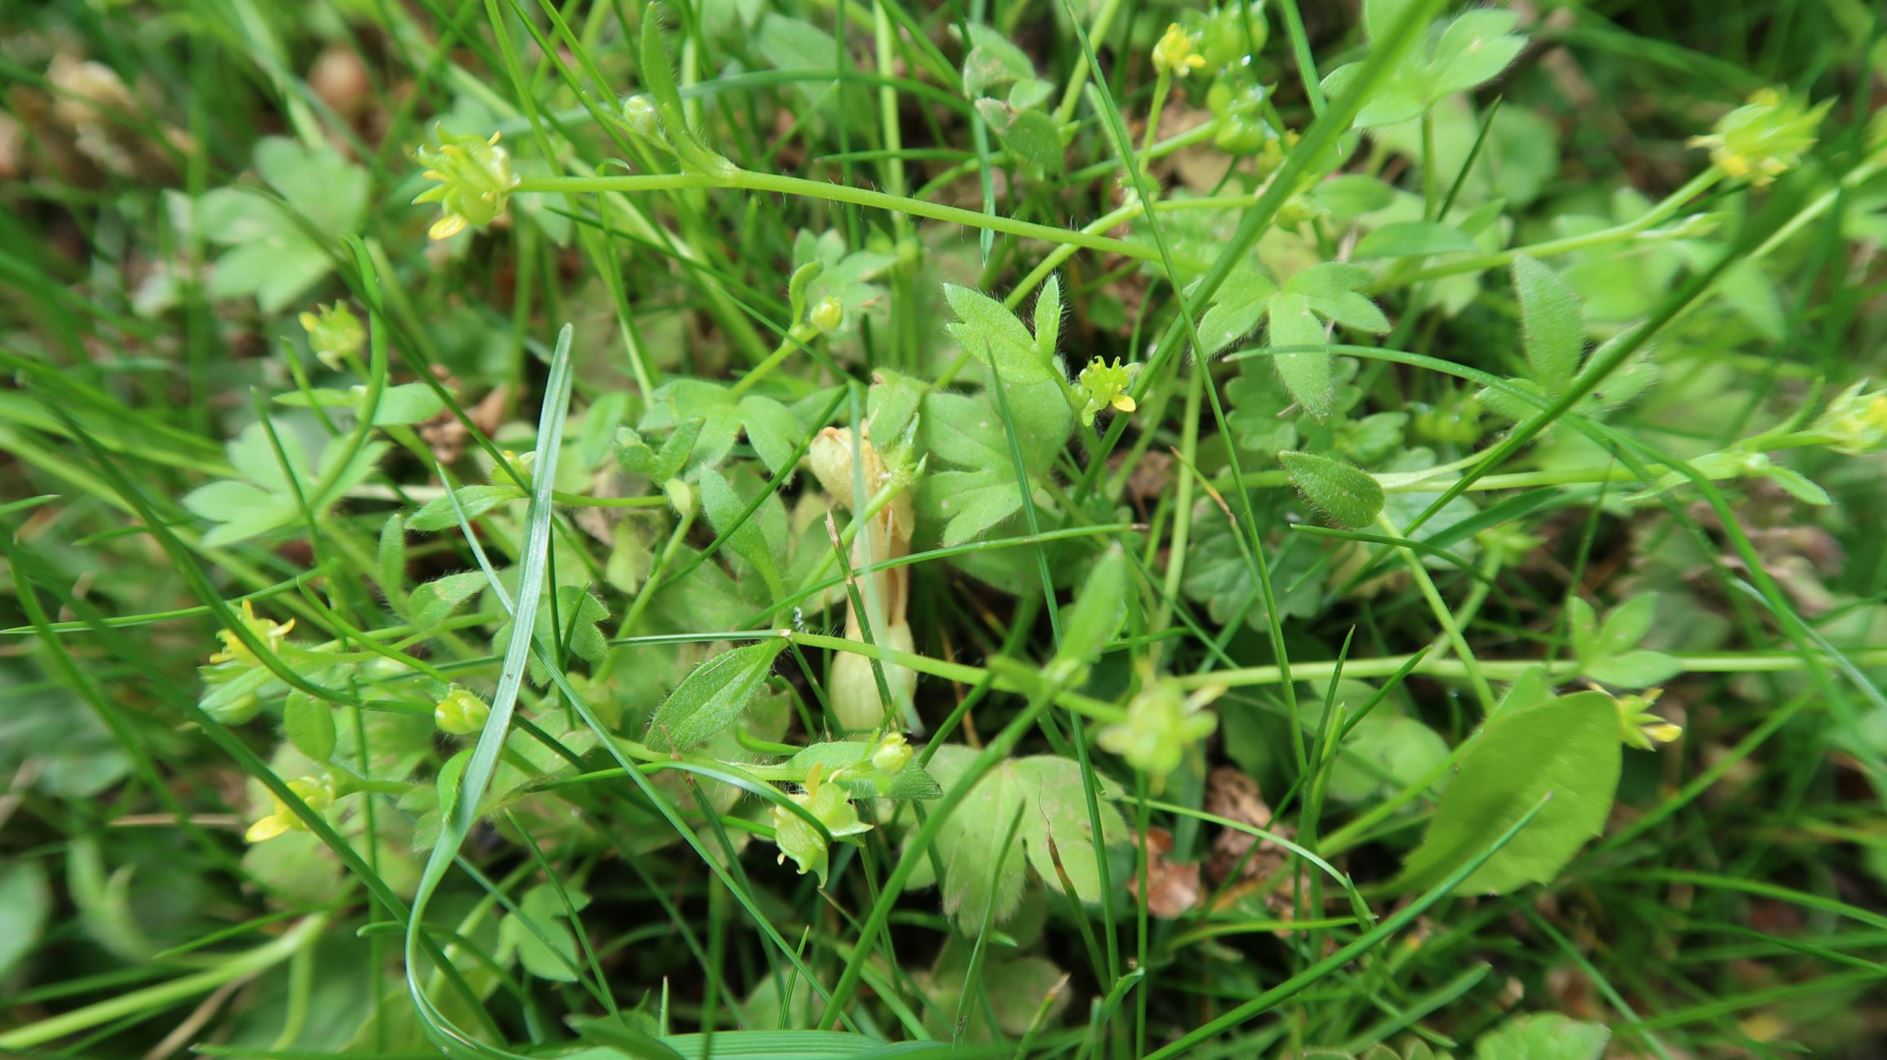 Ranunculus parviflorus - Kleinblütiger Hahnenfuß, smallflower buttercup